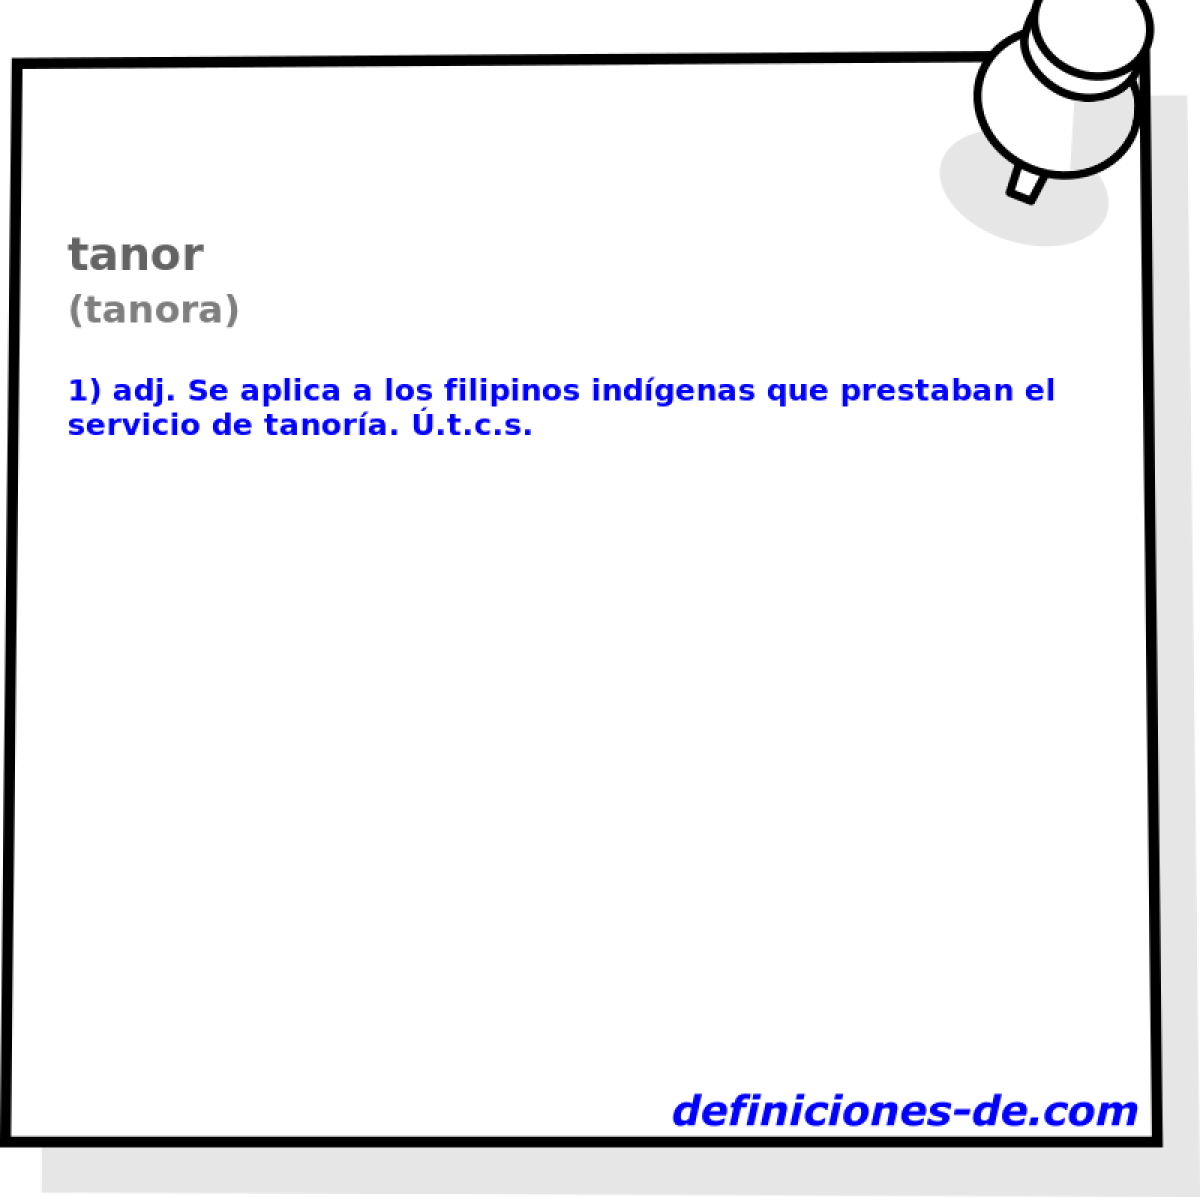 tanor (tanora)